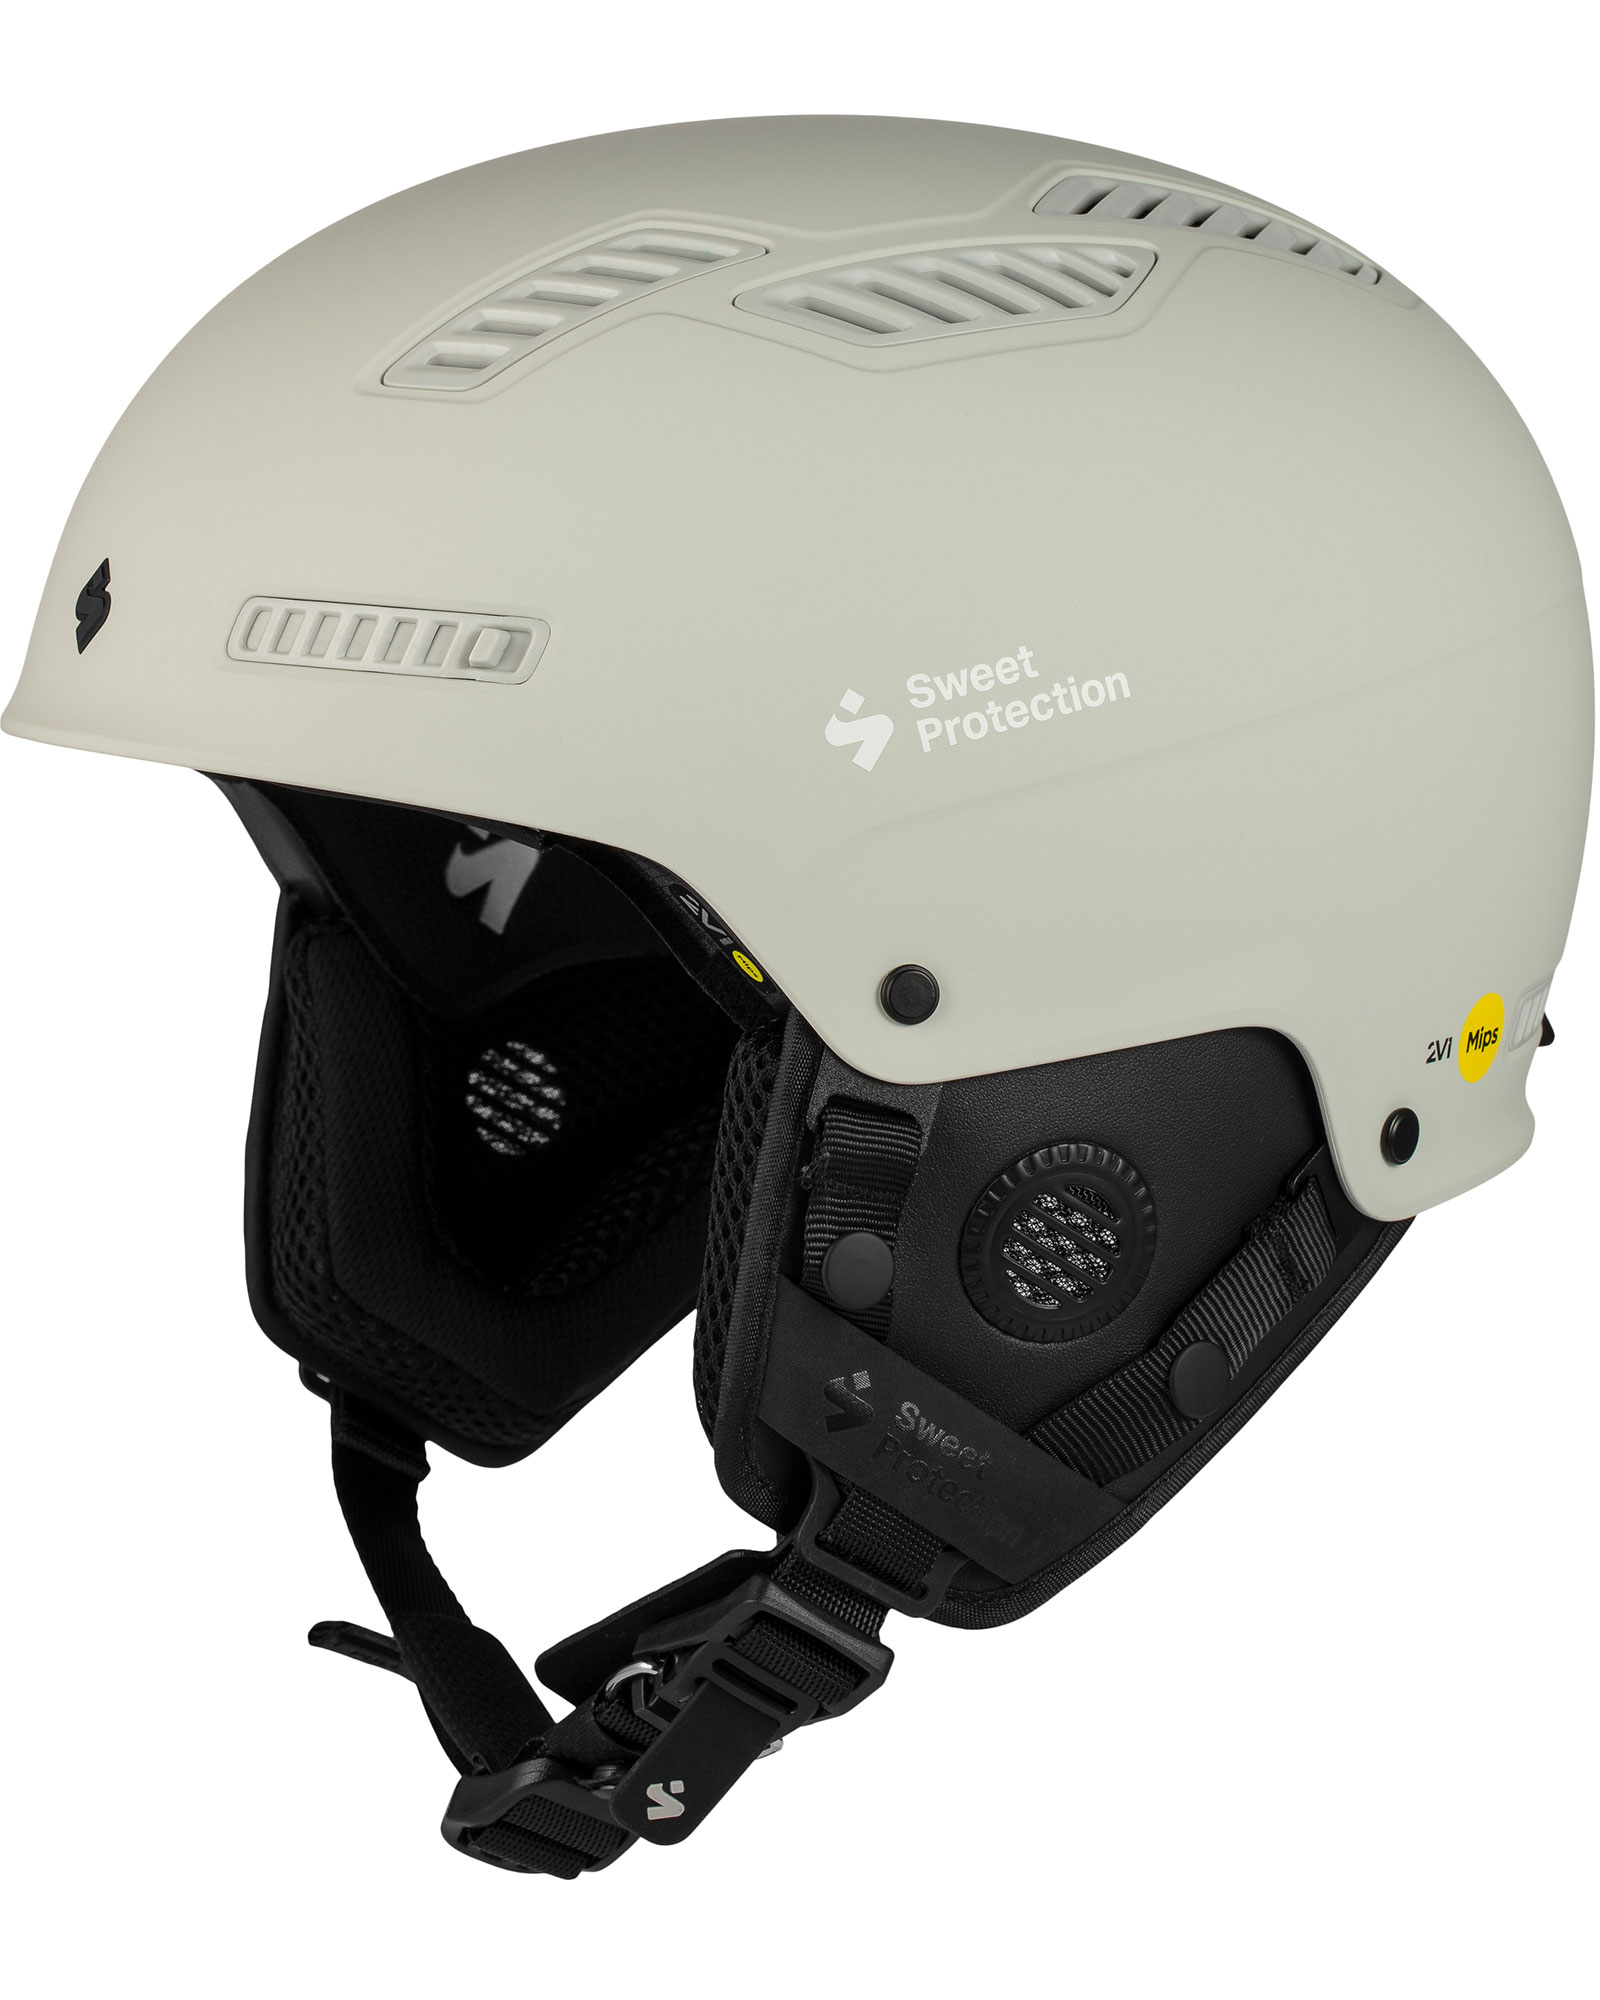 Sweet Protection Igniter 2VI MIPS Helmet - Matte Bronco White XL